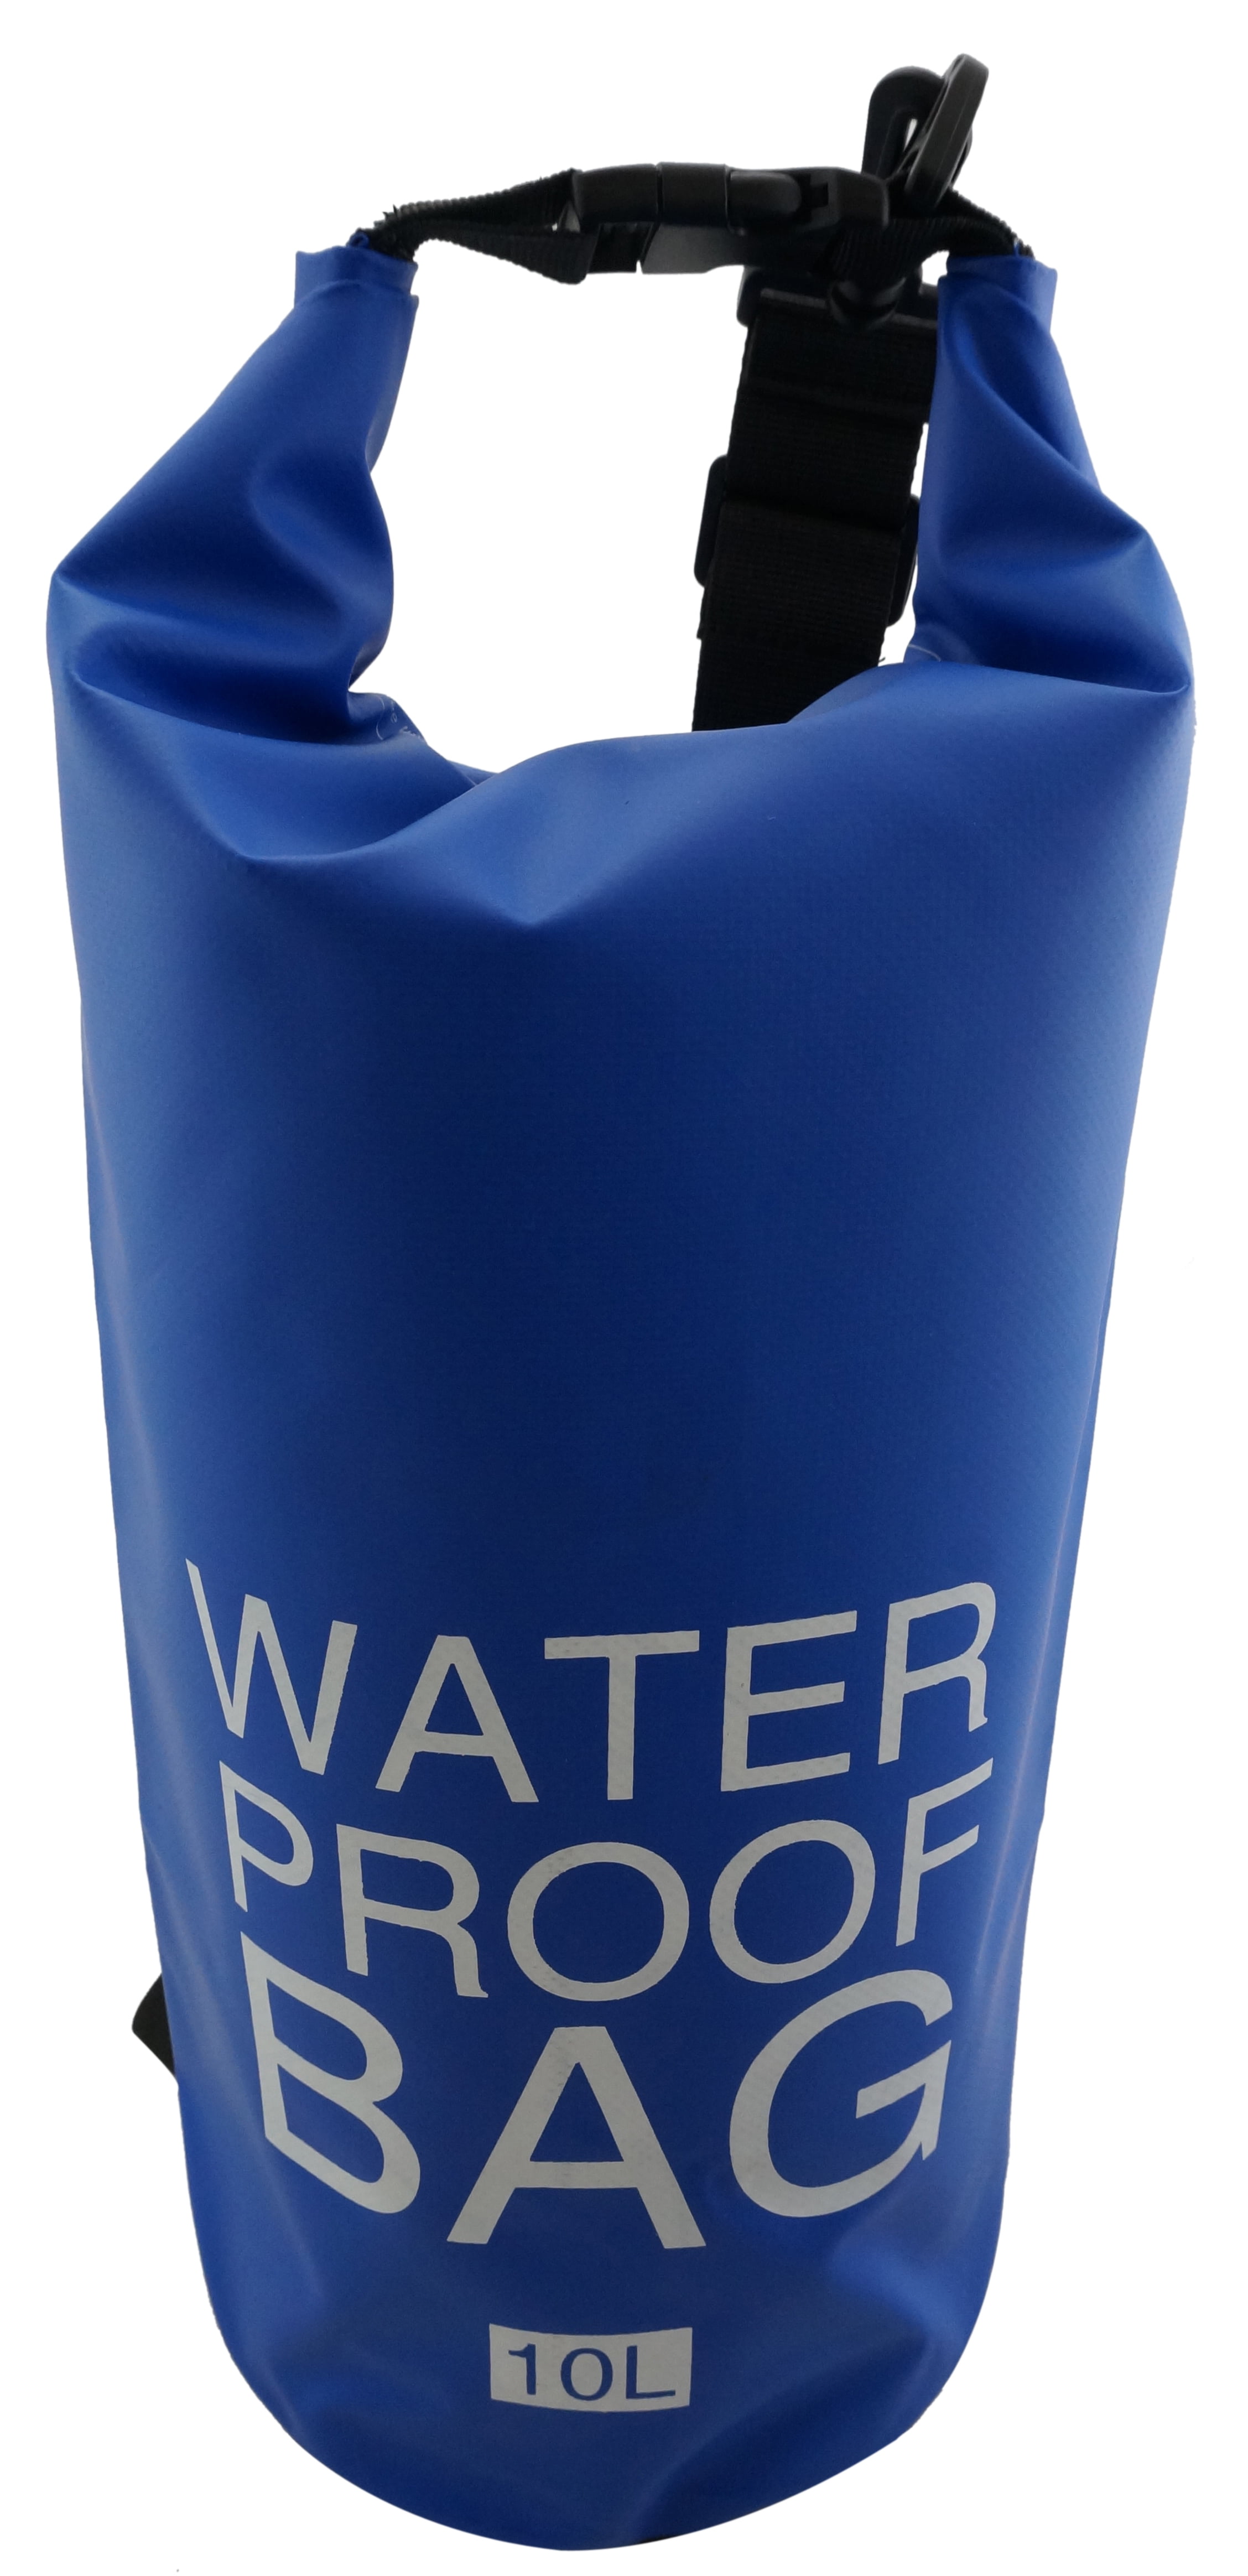 3 x Waterproof Dry Bags For Canoe Kayak Float Swim Sail Camping Hiking blue 